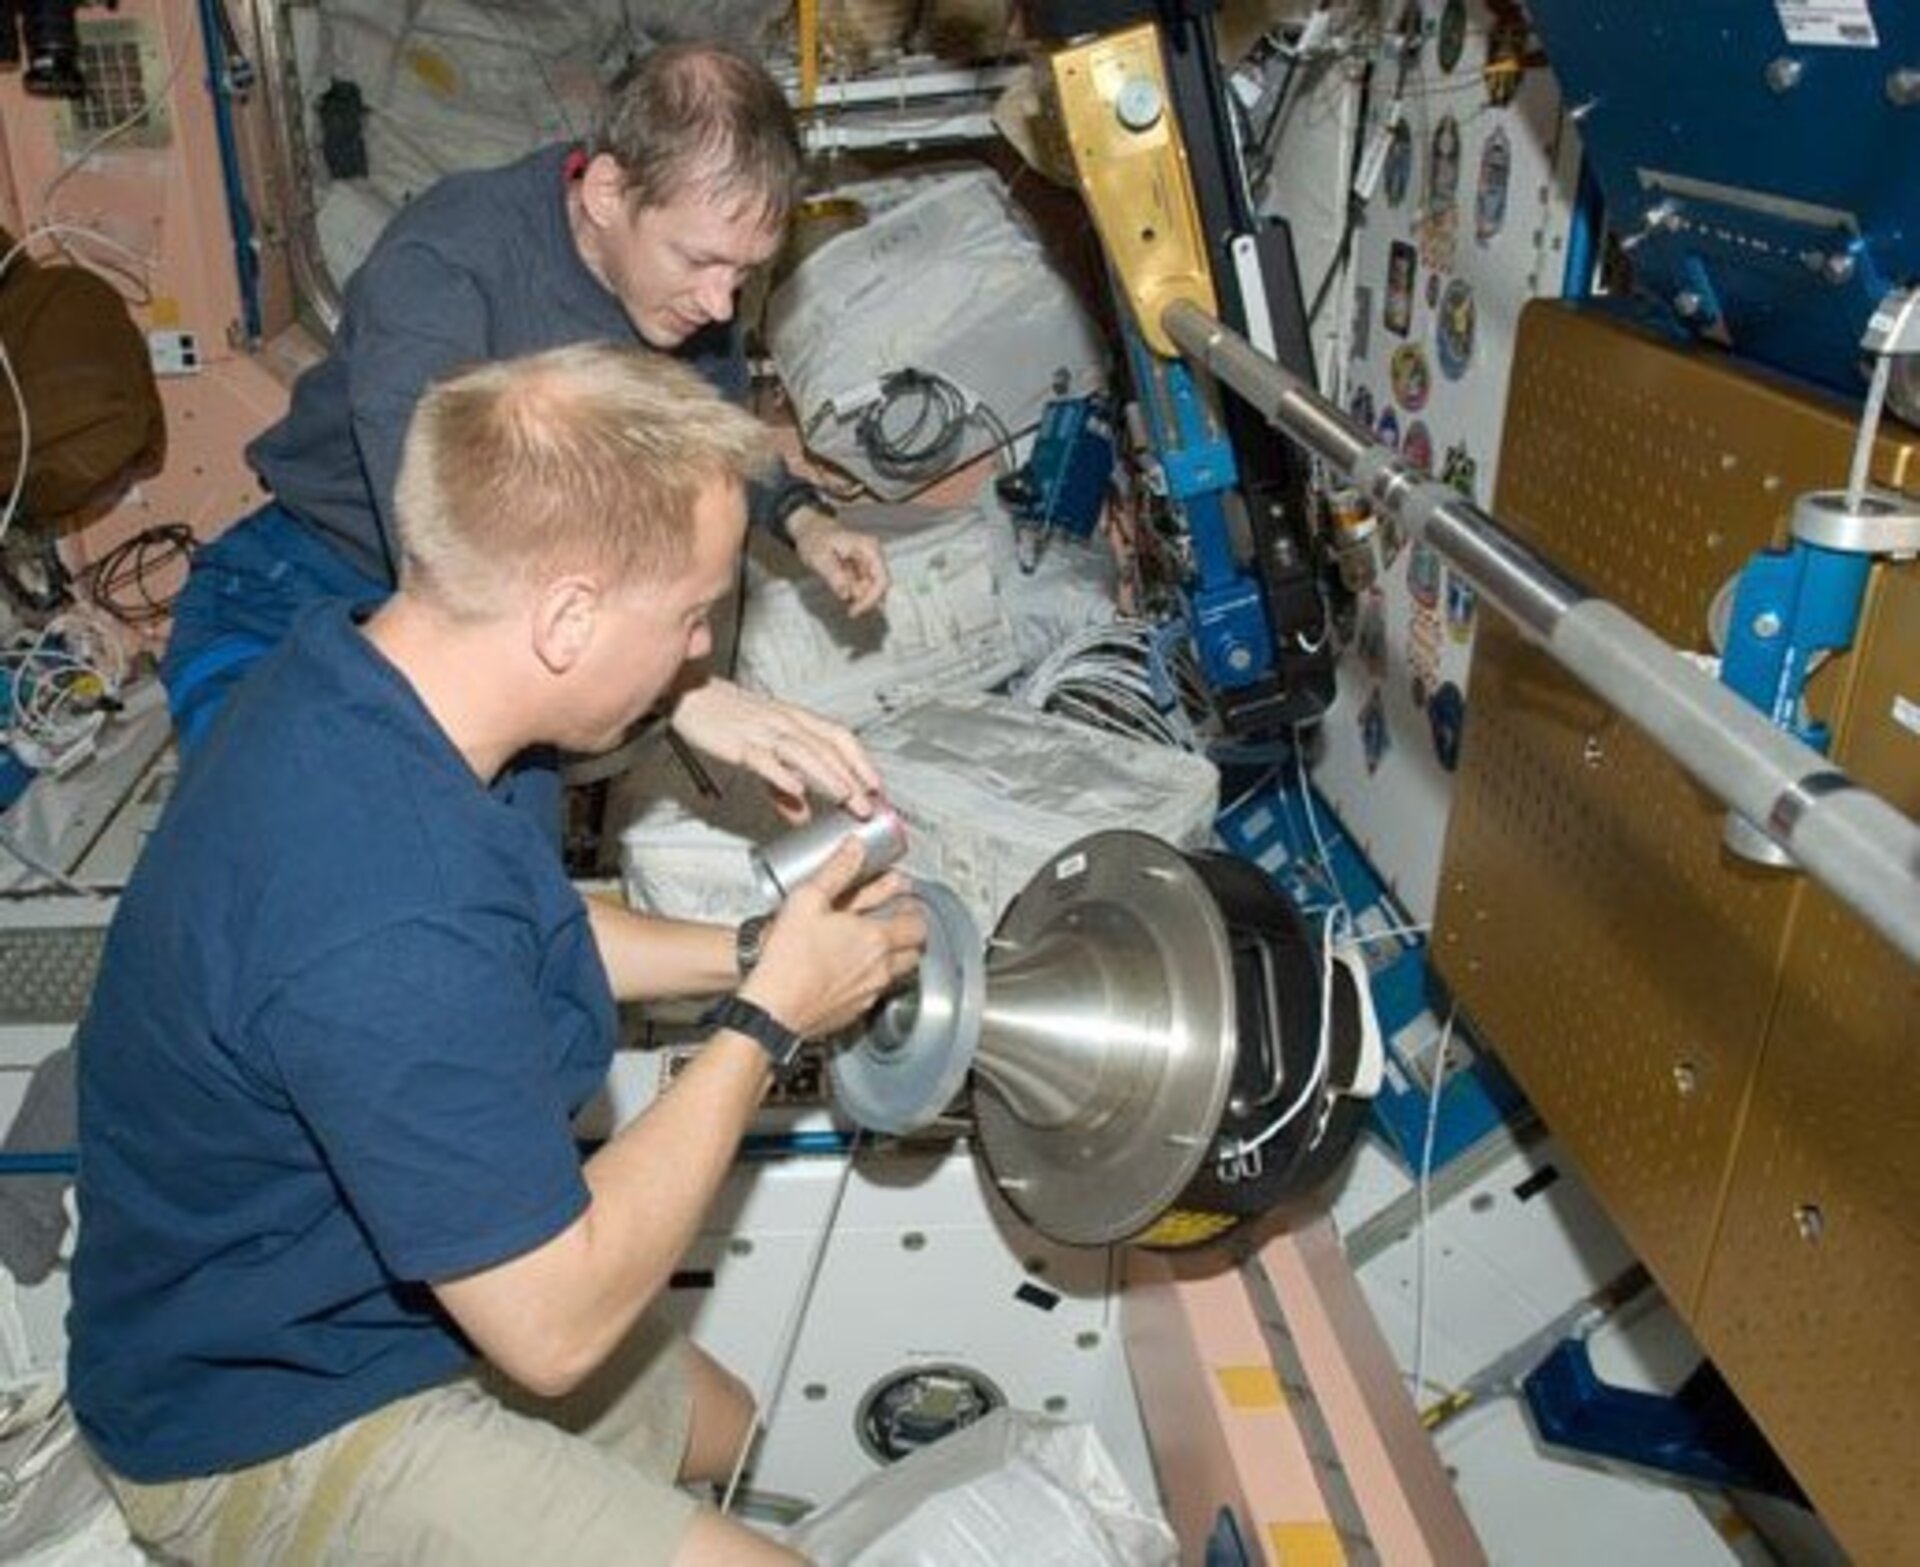 Working with NASA astronaut Tim Kopra in the Unity module